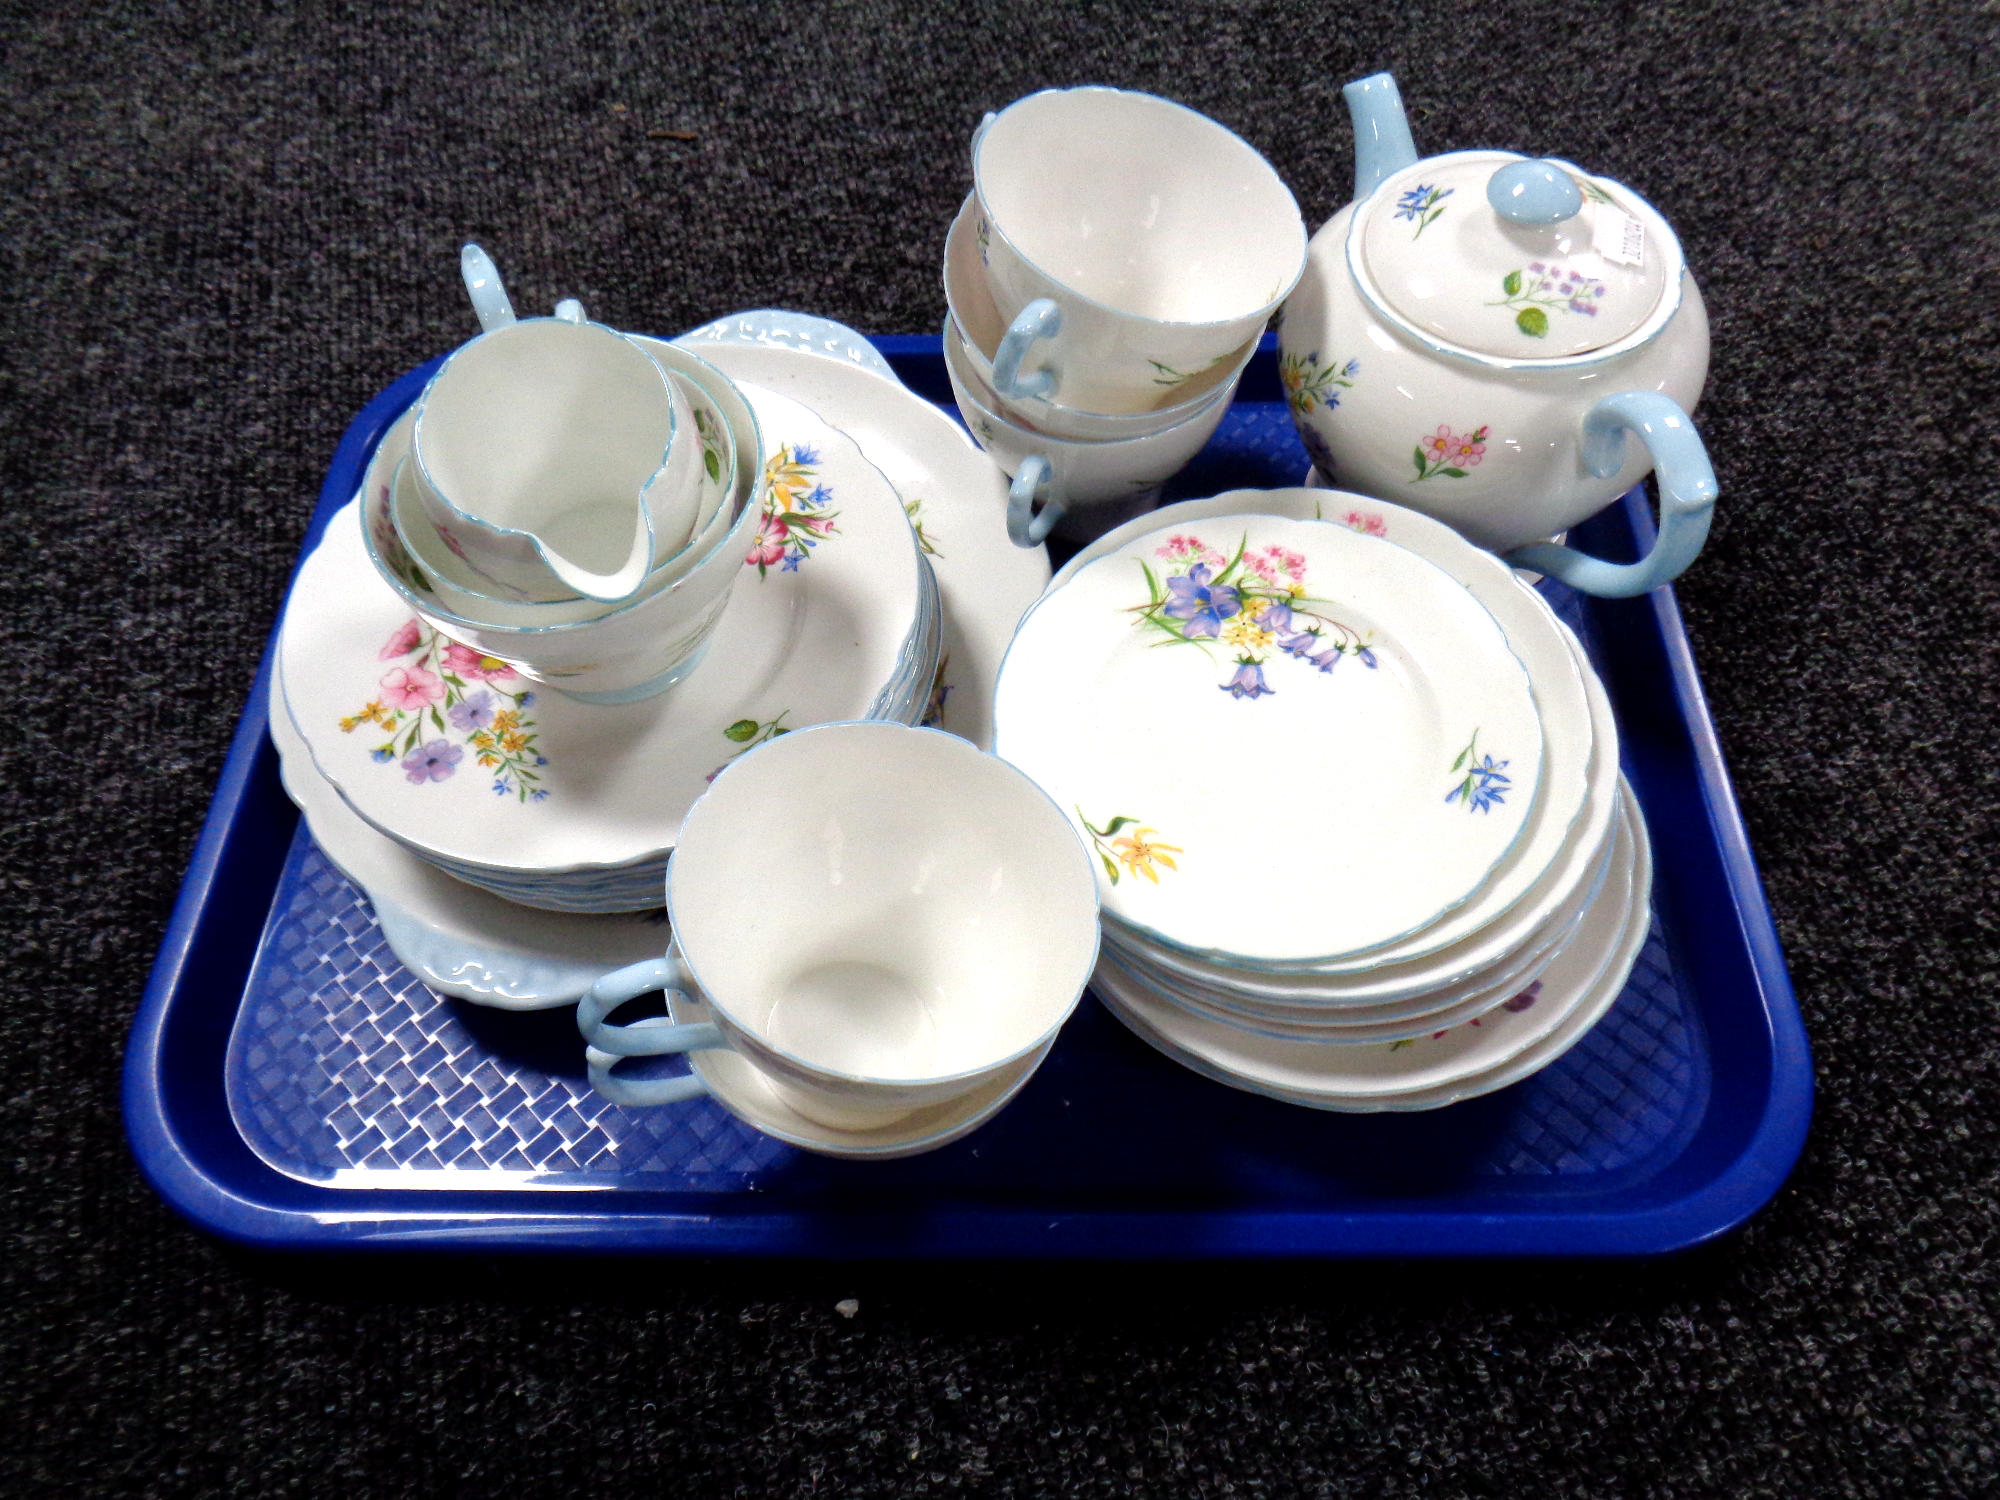 A tray of Wild Flowers Shelley tea china.